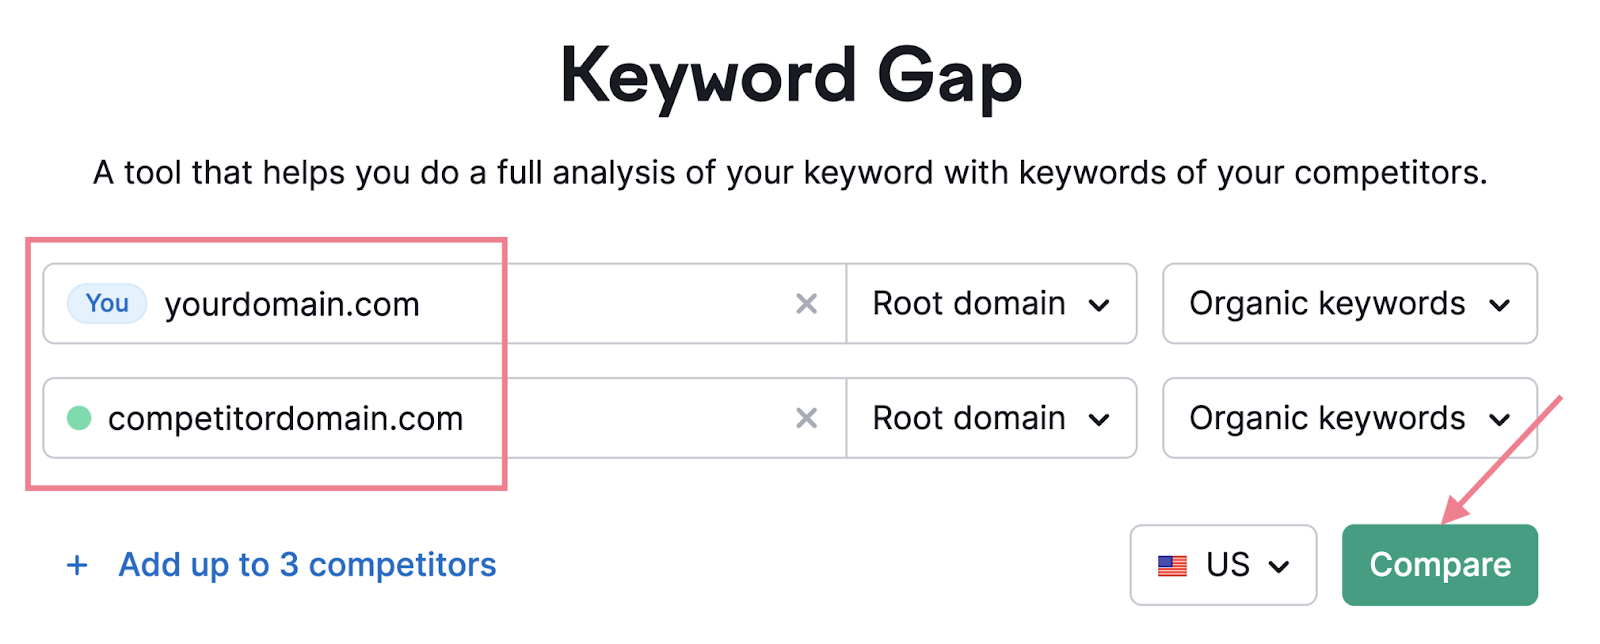 Keyword Gap tool search bars